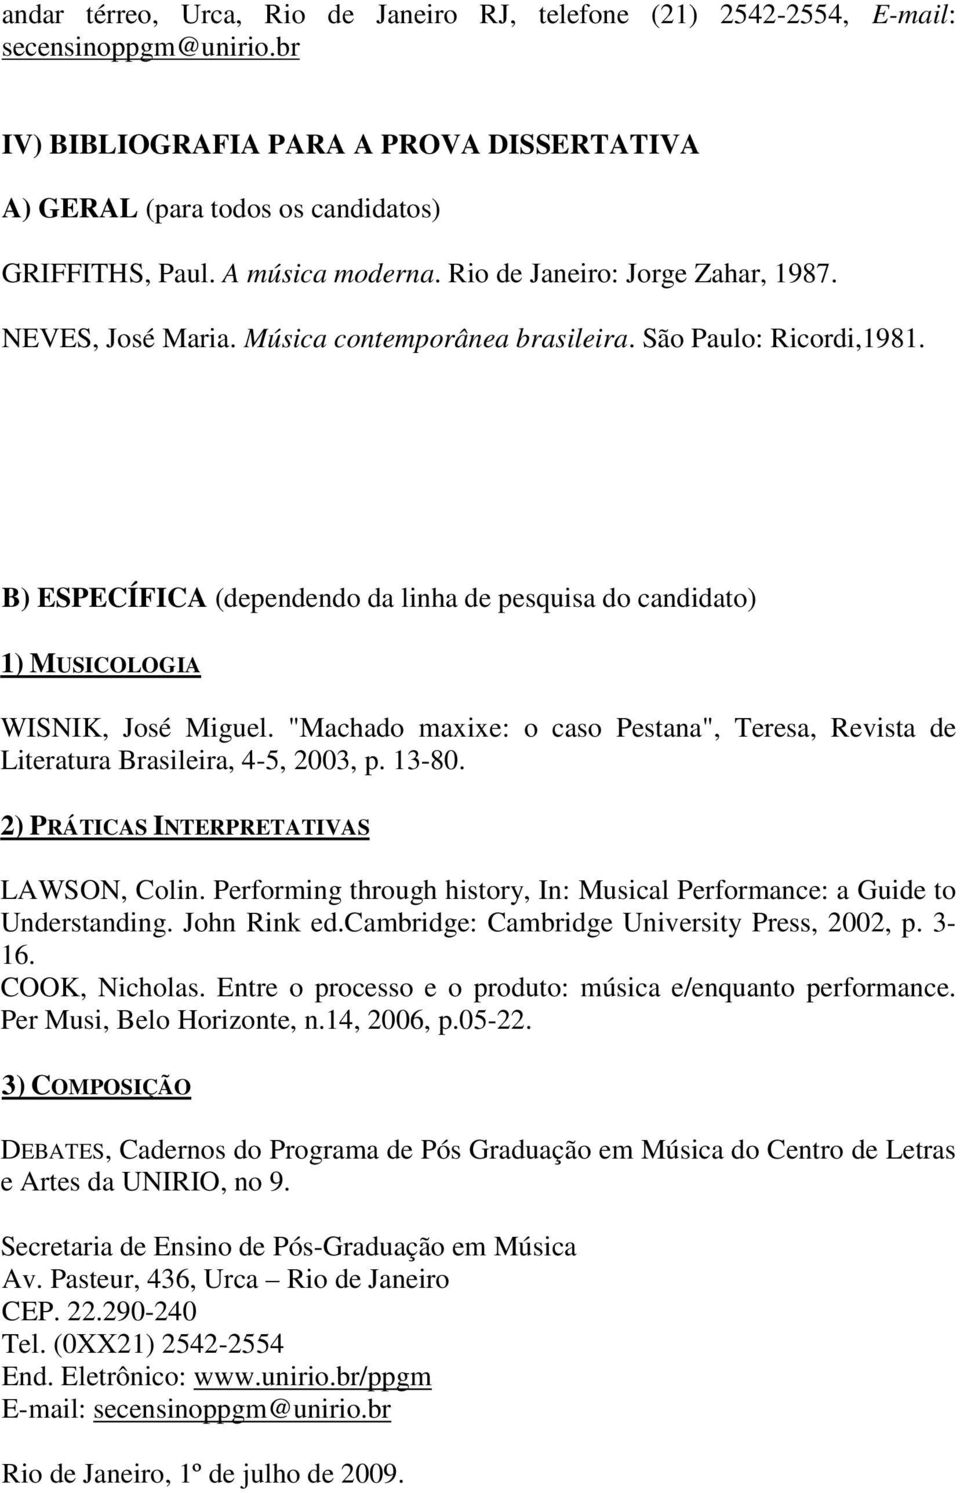 B) ESPECÍFICA (dependendo da linha de pesquisa do candidato) 1) MUSICOLOGIA WISNIK, José Miguel. "Machado maxixe: o caso Pestana", Teresa, Revista de Literatura Brasileira, 4-5, 2003, p. 13-80.